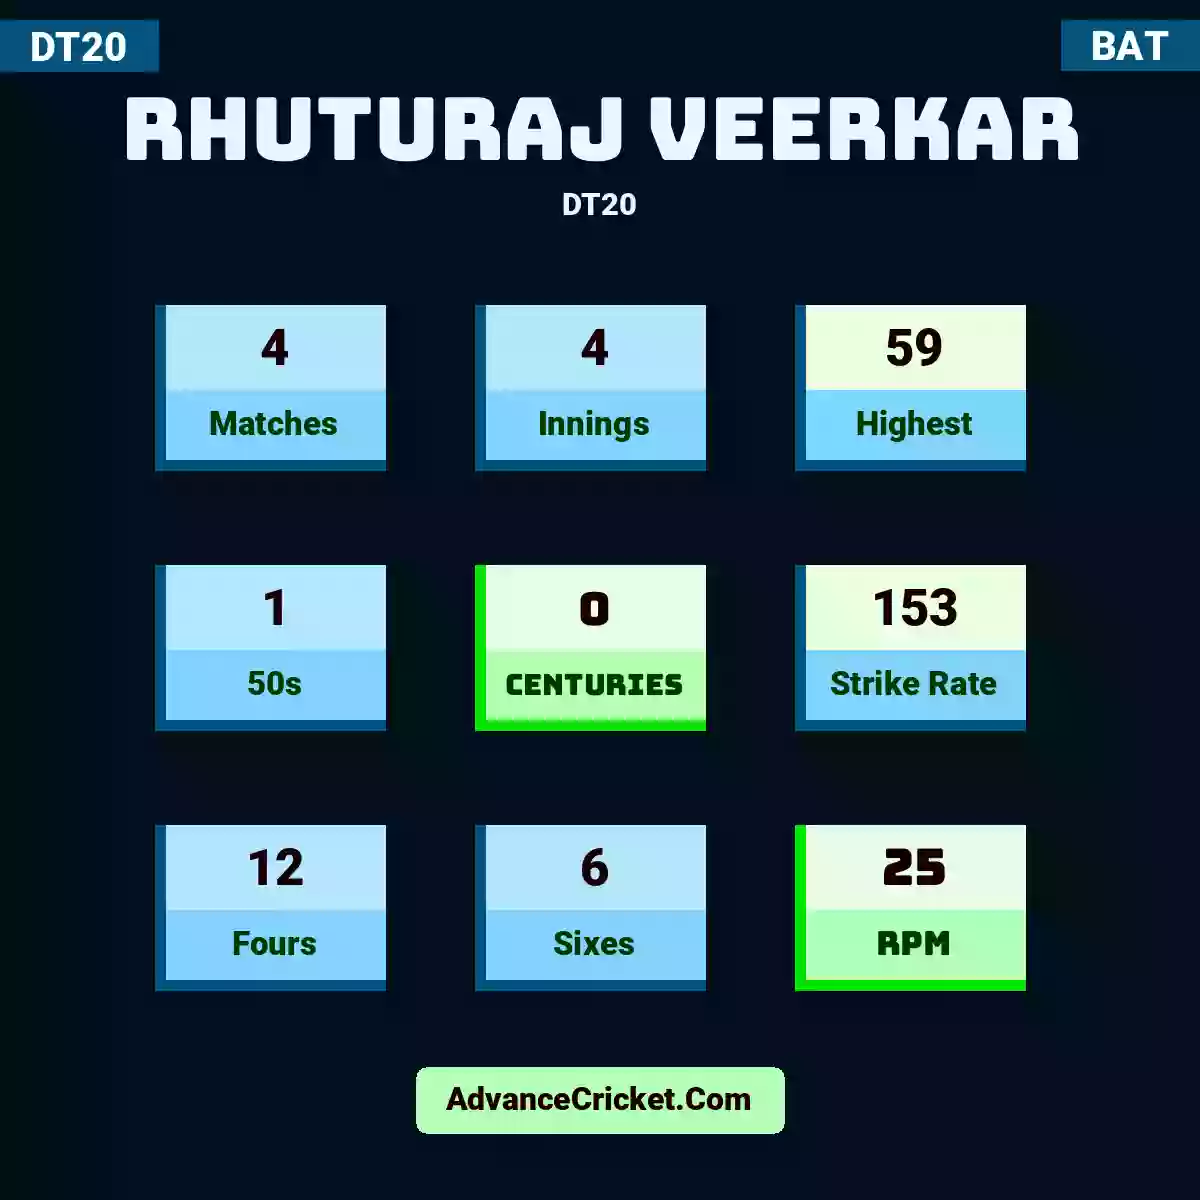 Rhuturaj Veerkar DT20 , Rhuturaj Veerkar played 4 matches, scored 59 runs as highest, 1 half-centuries, and 0 centuries, with a strike rate of 153. R.Veerkar hit 12 fours and 6 sixes, with an RPM of 25.